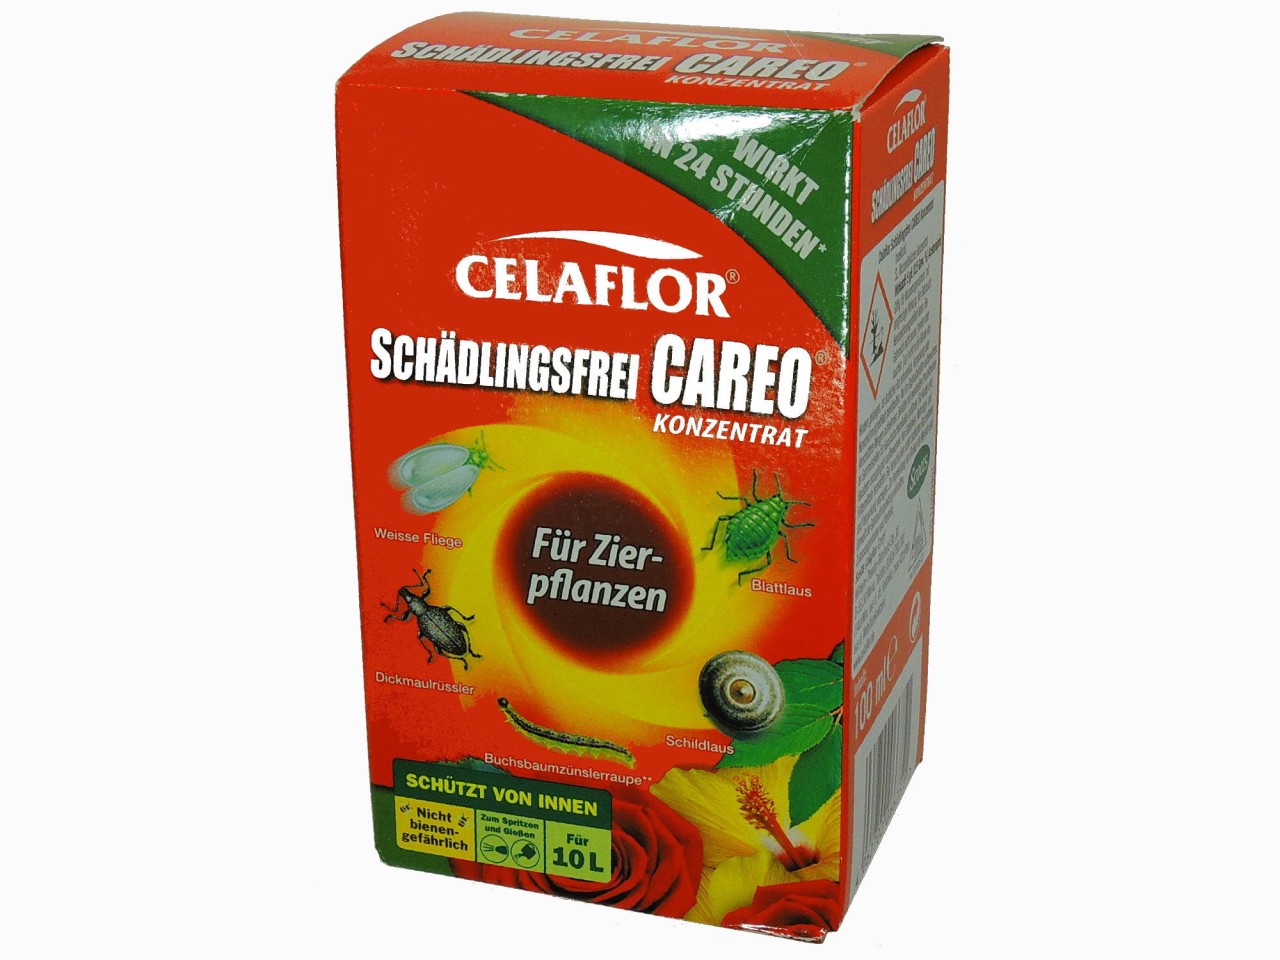 SCOTTS Celaflor Schädlingsfrei CAREO (100ml) konz.